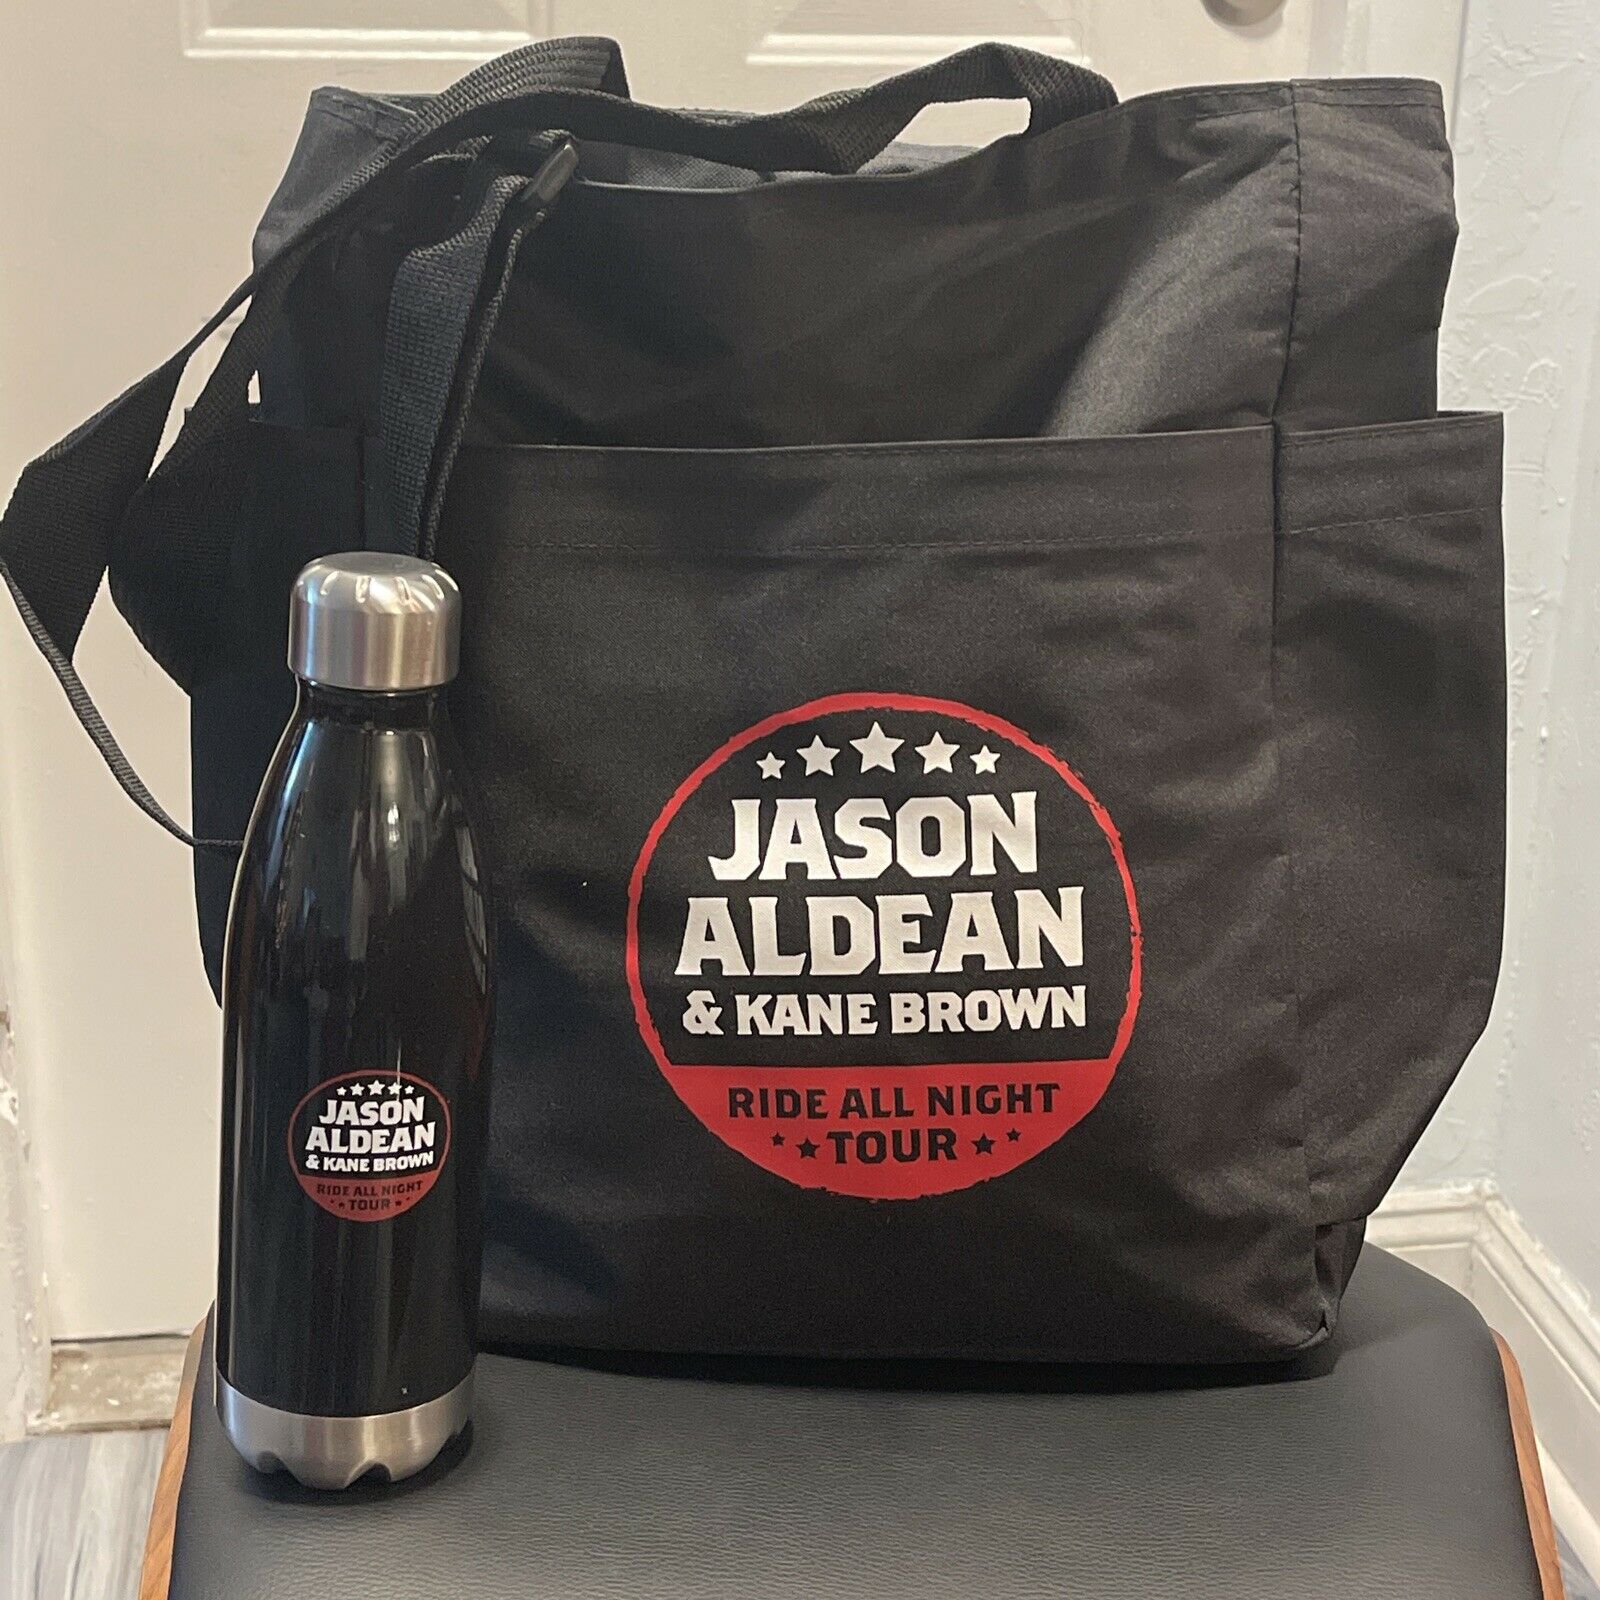 Jason Aldean & Kane Brown Ride All Night Tour Bag And Bottle